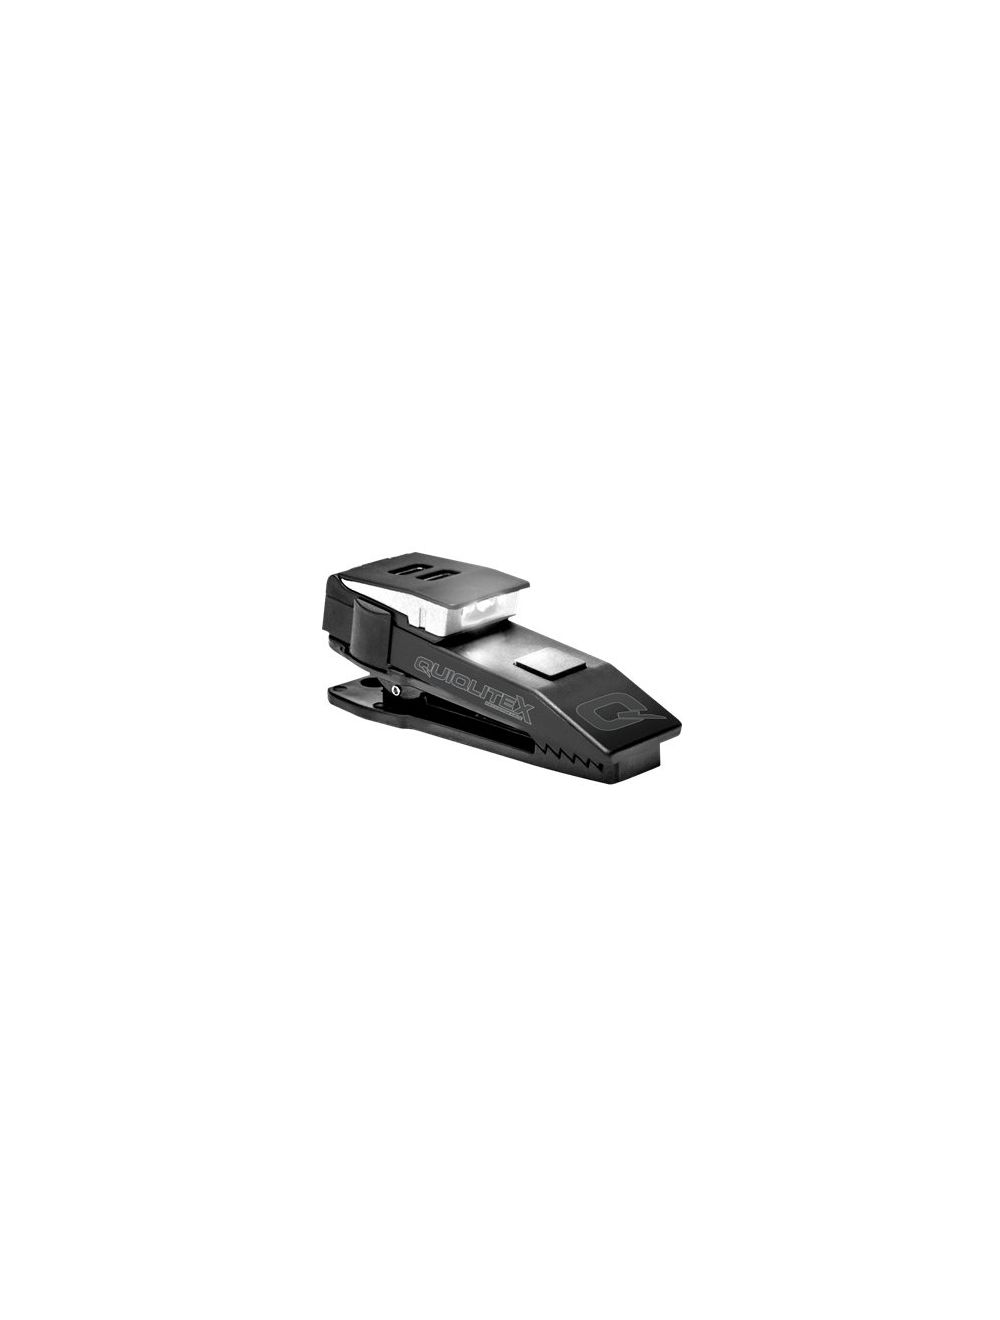 QuiqLiteX USB Rechargeable Plastic Housing 20 - 150 Lumens